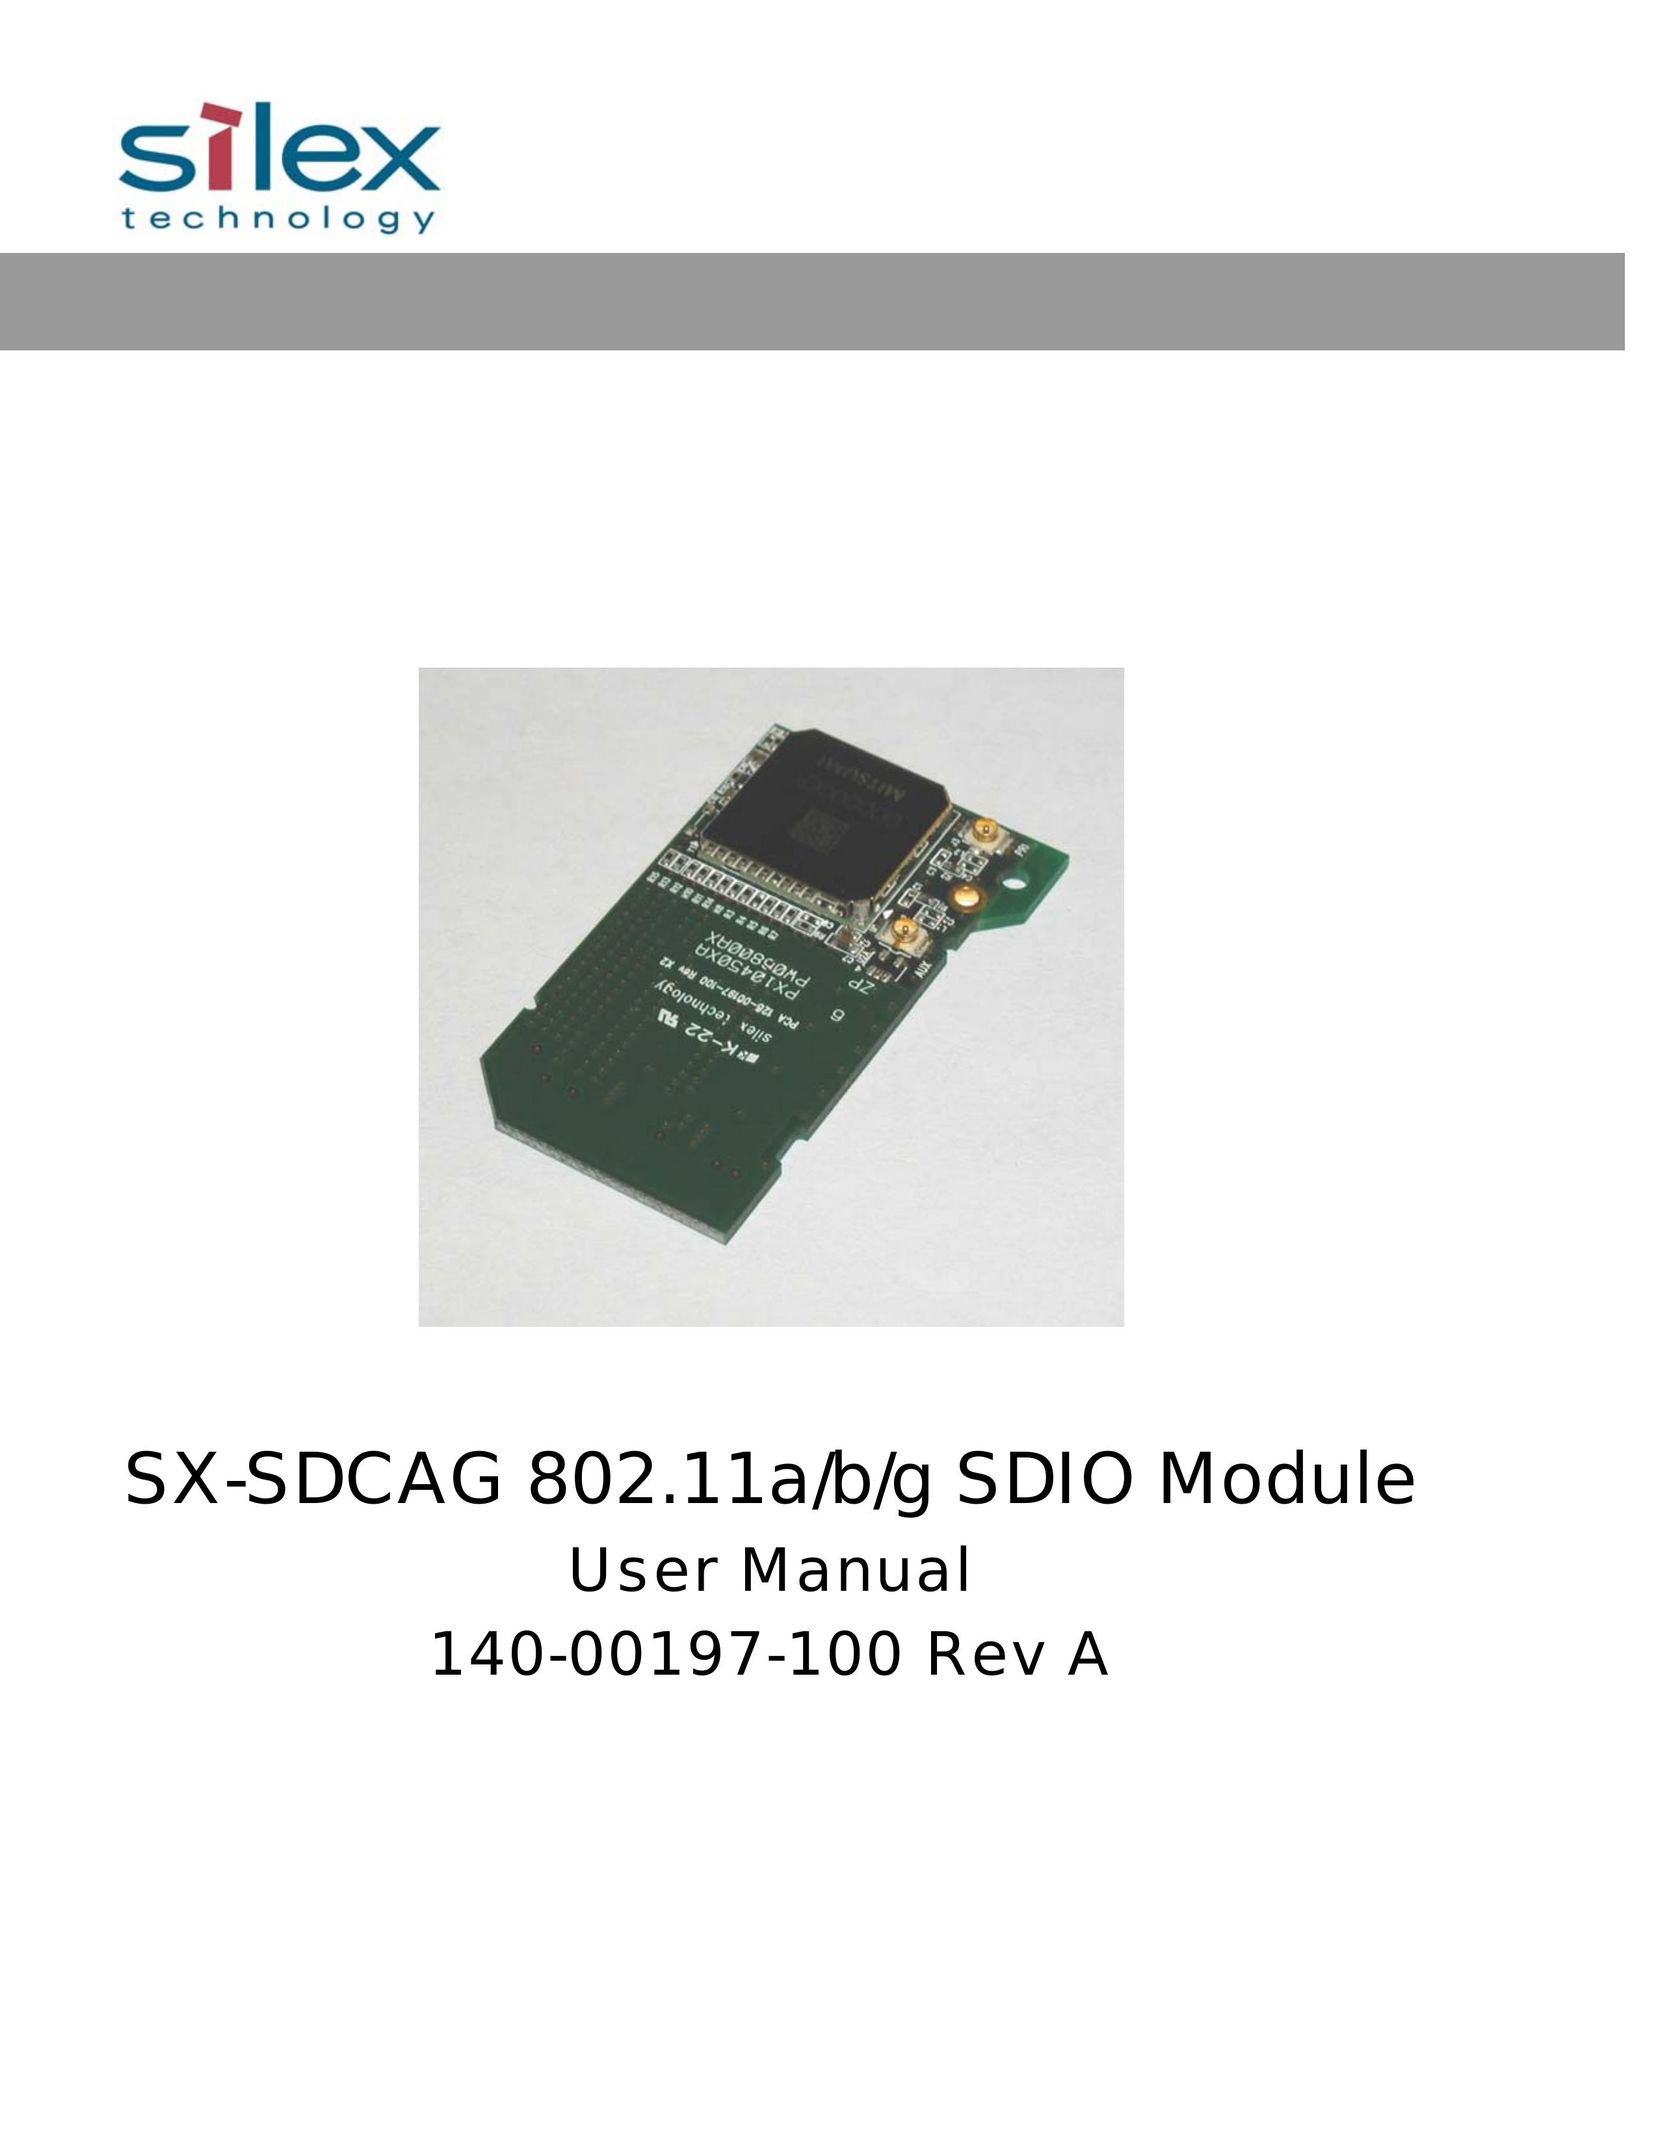 Silex technology 140-00197-100 Network Card User Manual